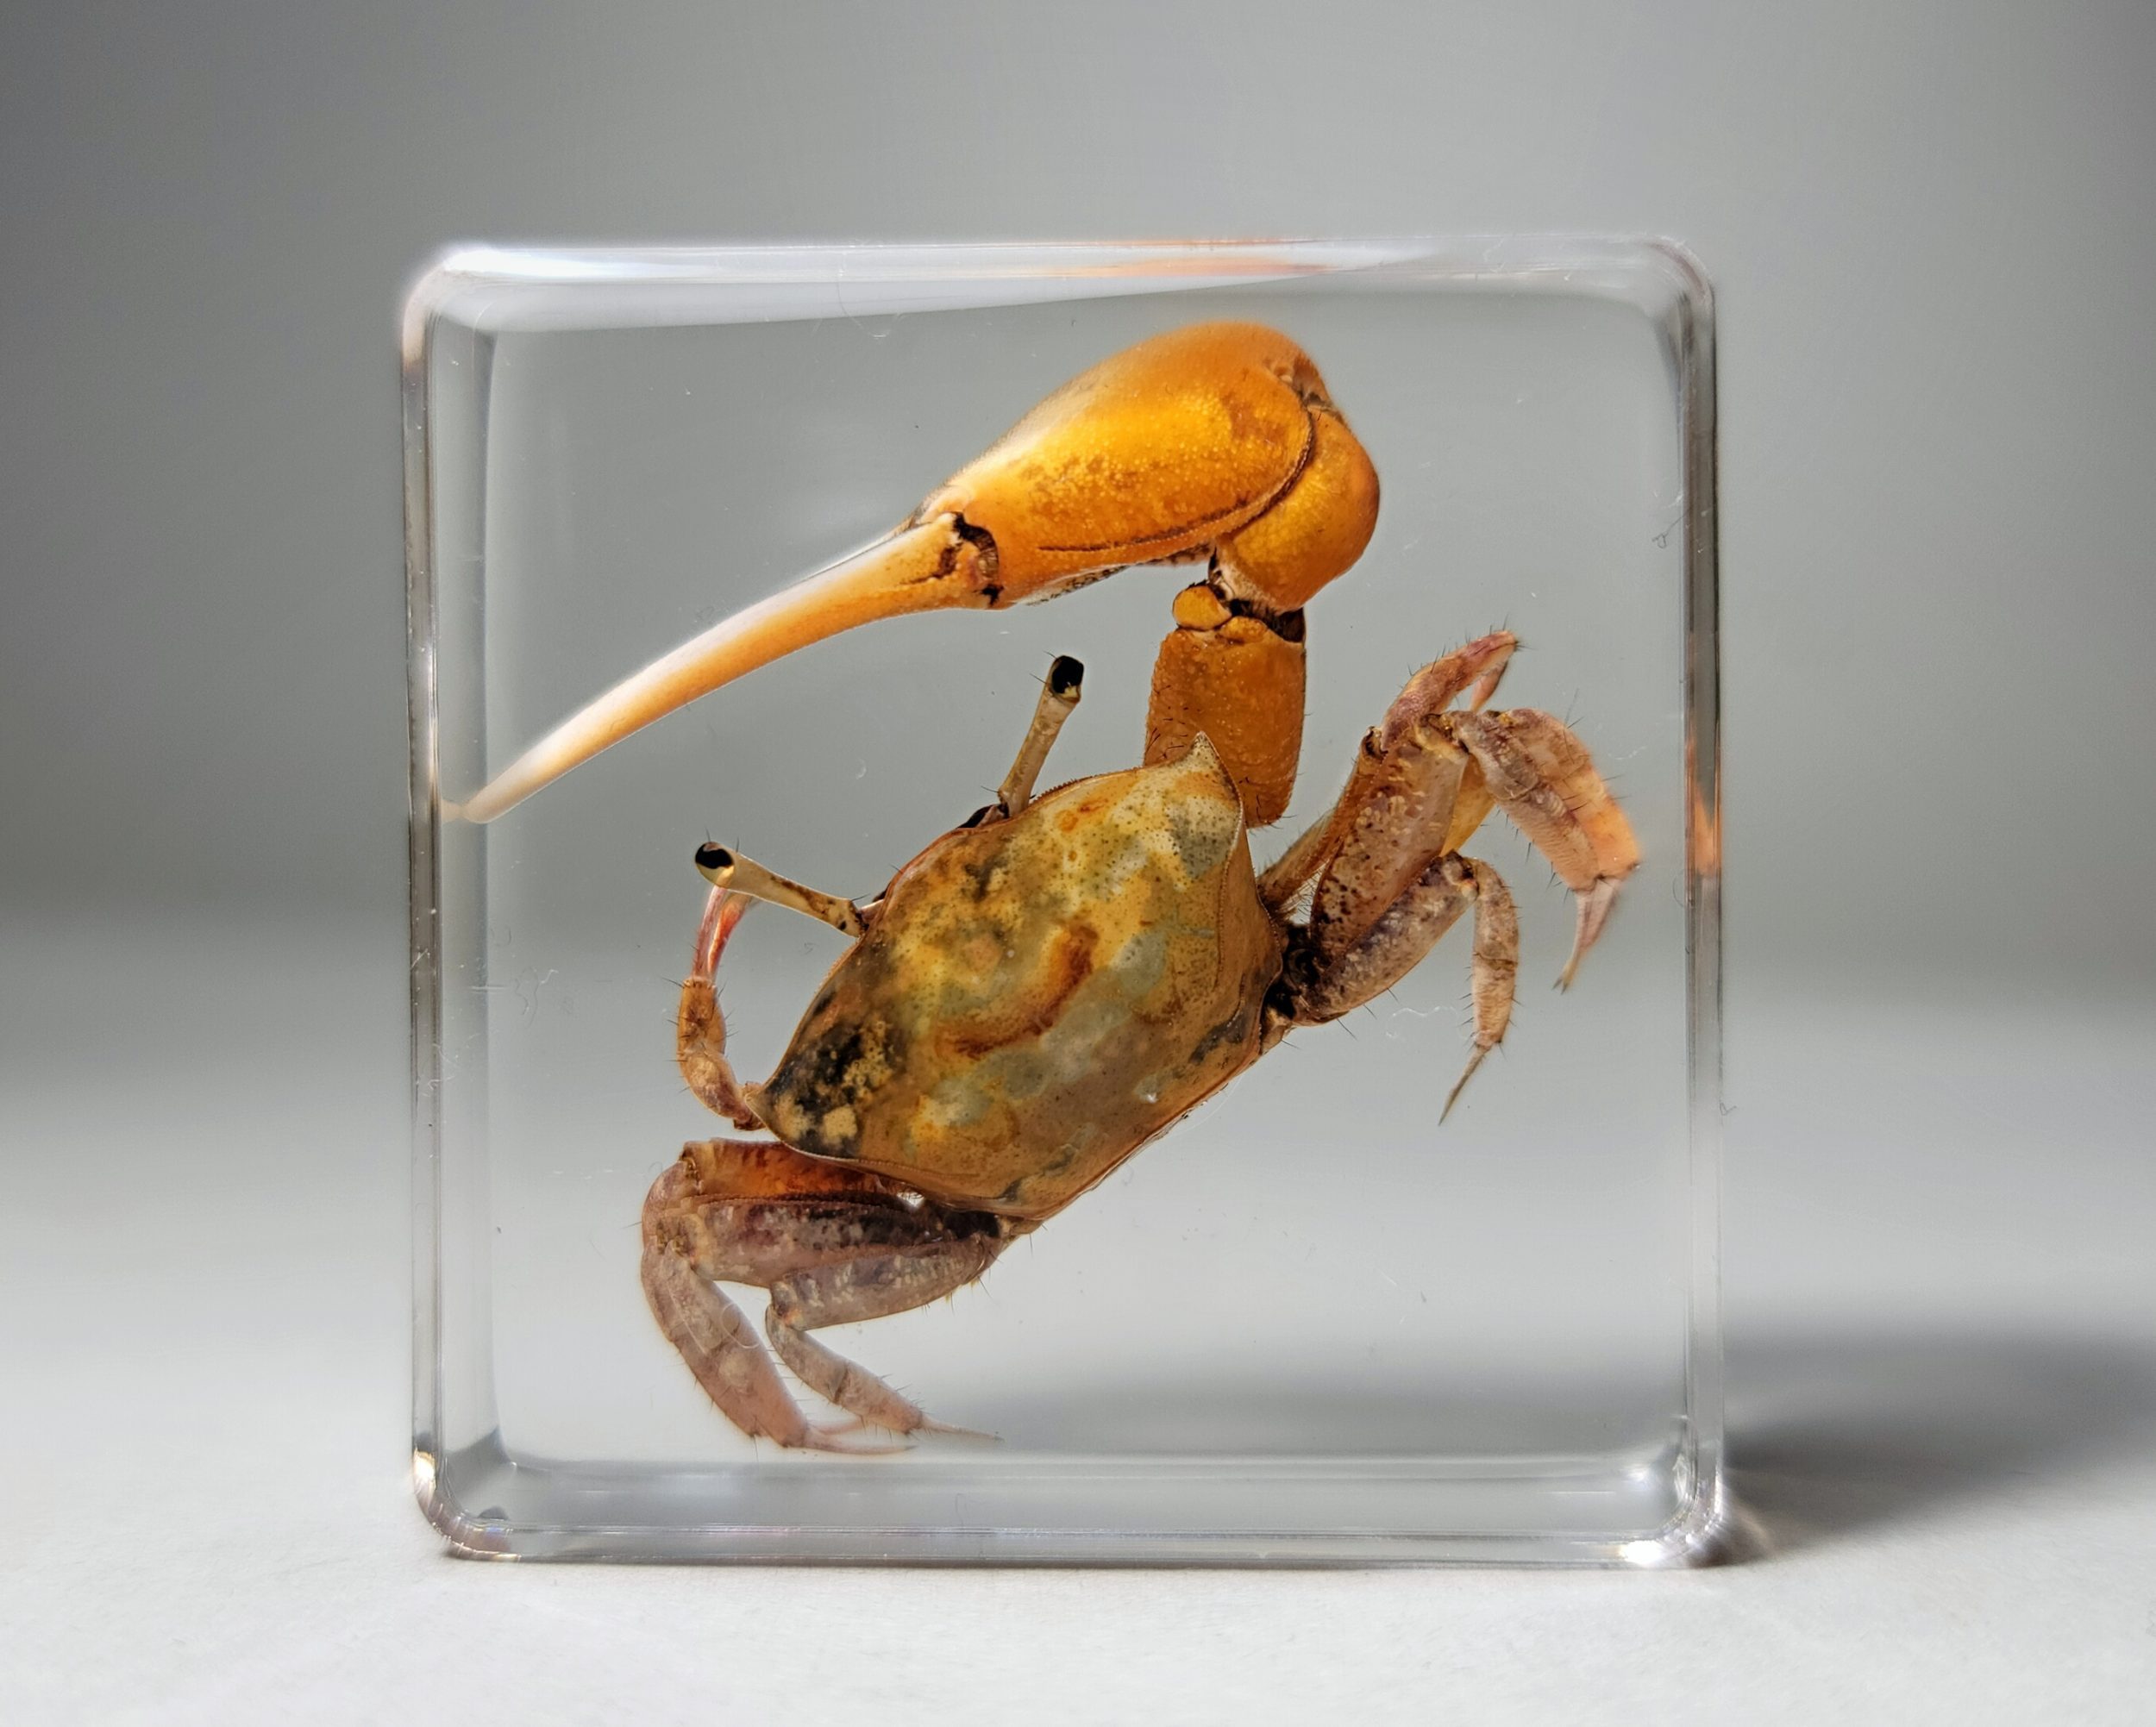 https://insectsinresin.com/wp-content/uploads/2021/11/Fiddler-Crab-In-Resin-Real-Crab-Specimen-2-scaled-scaled.jpg